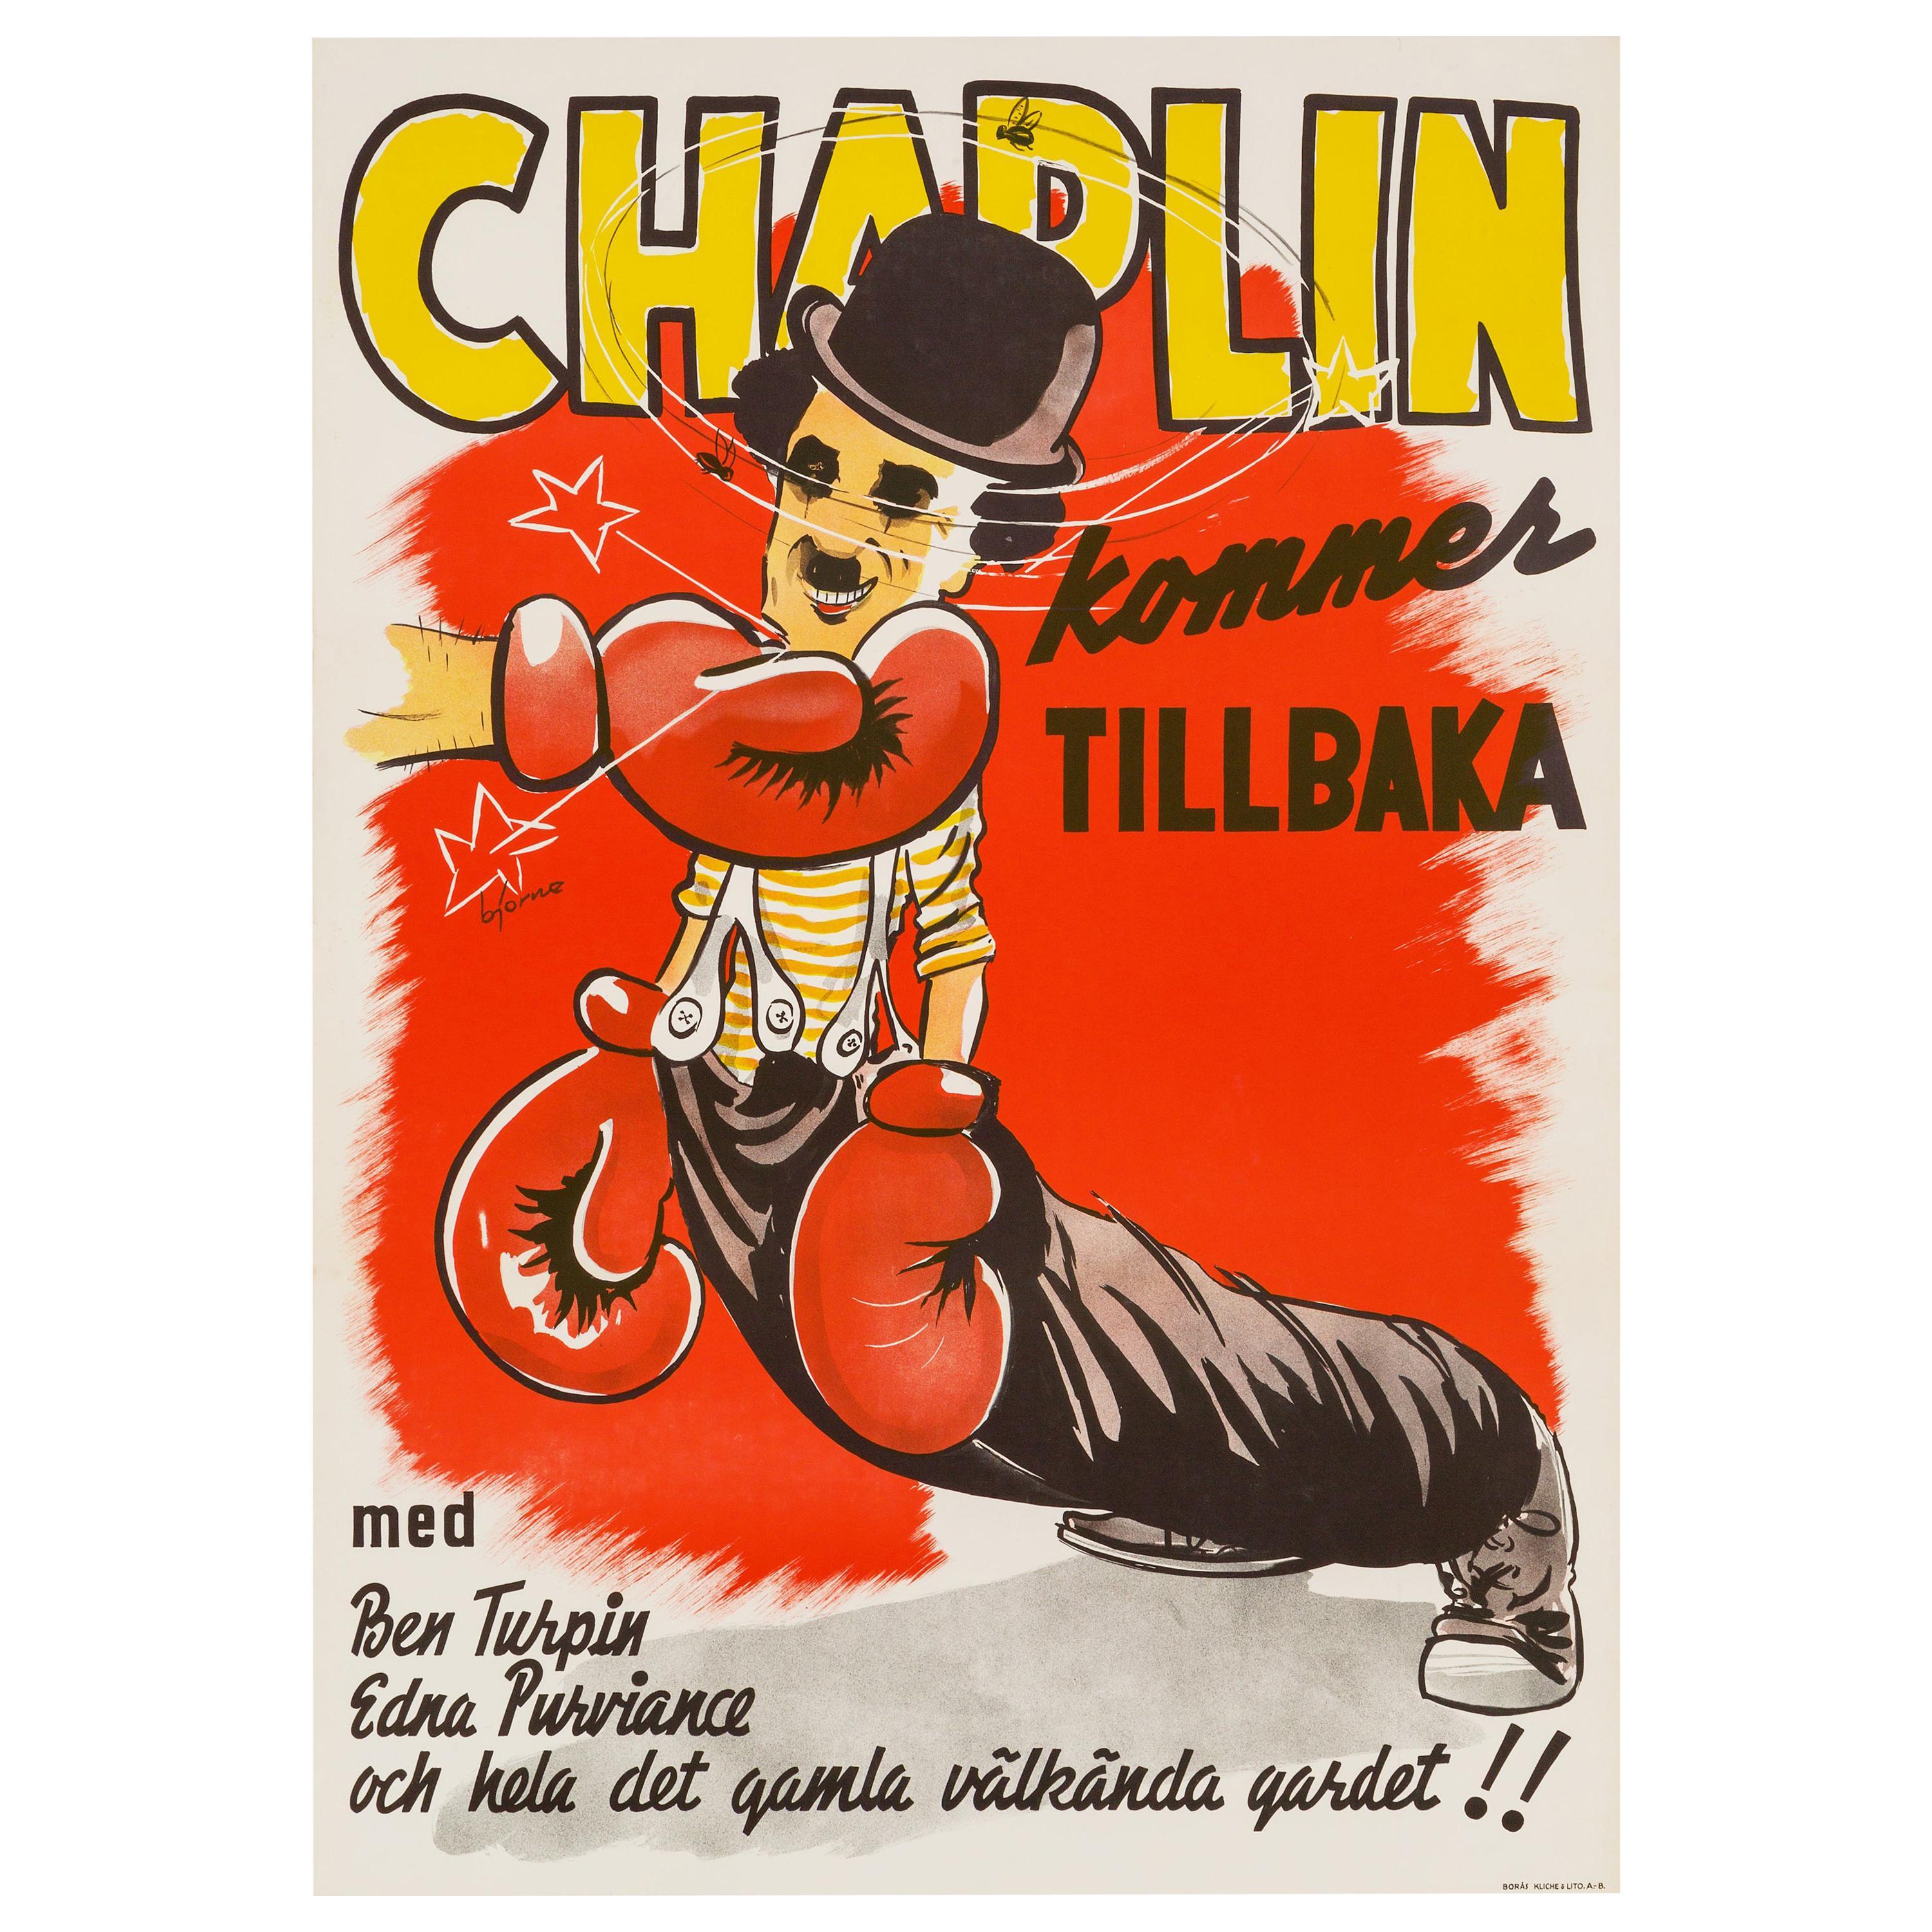 Charlie Chaplin 'The Champion' Original Vintage Movie Poster, Swedish, 1944 - Art by Unknown